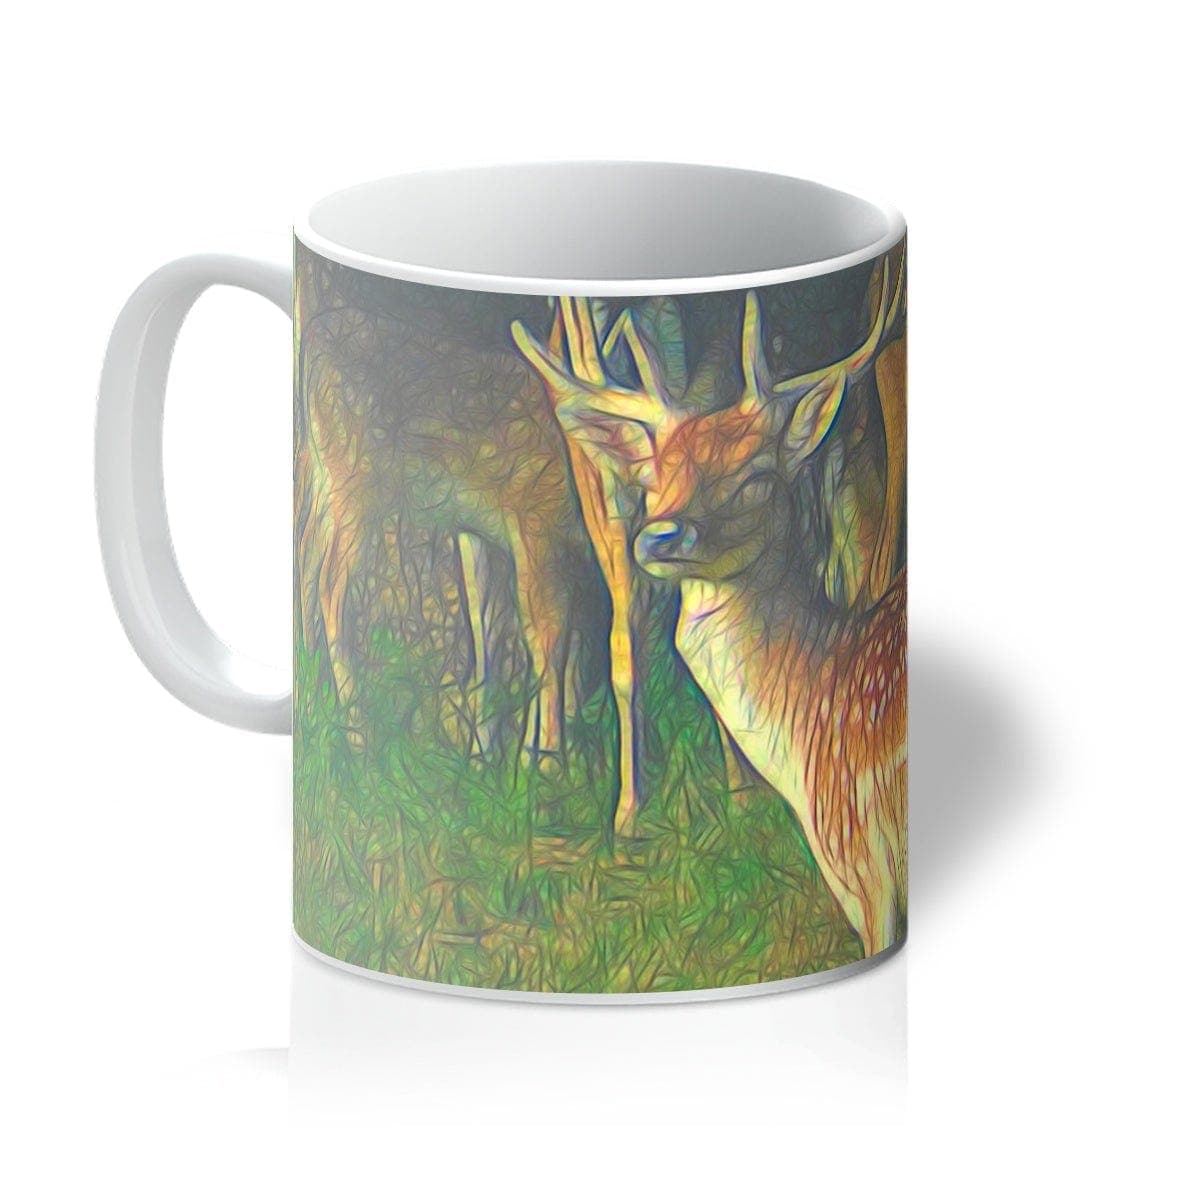 Male deer, Mug, by Mother Nature Art